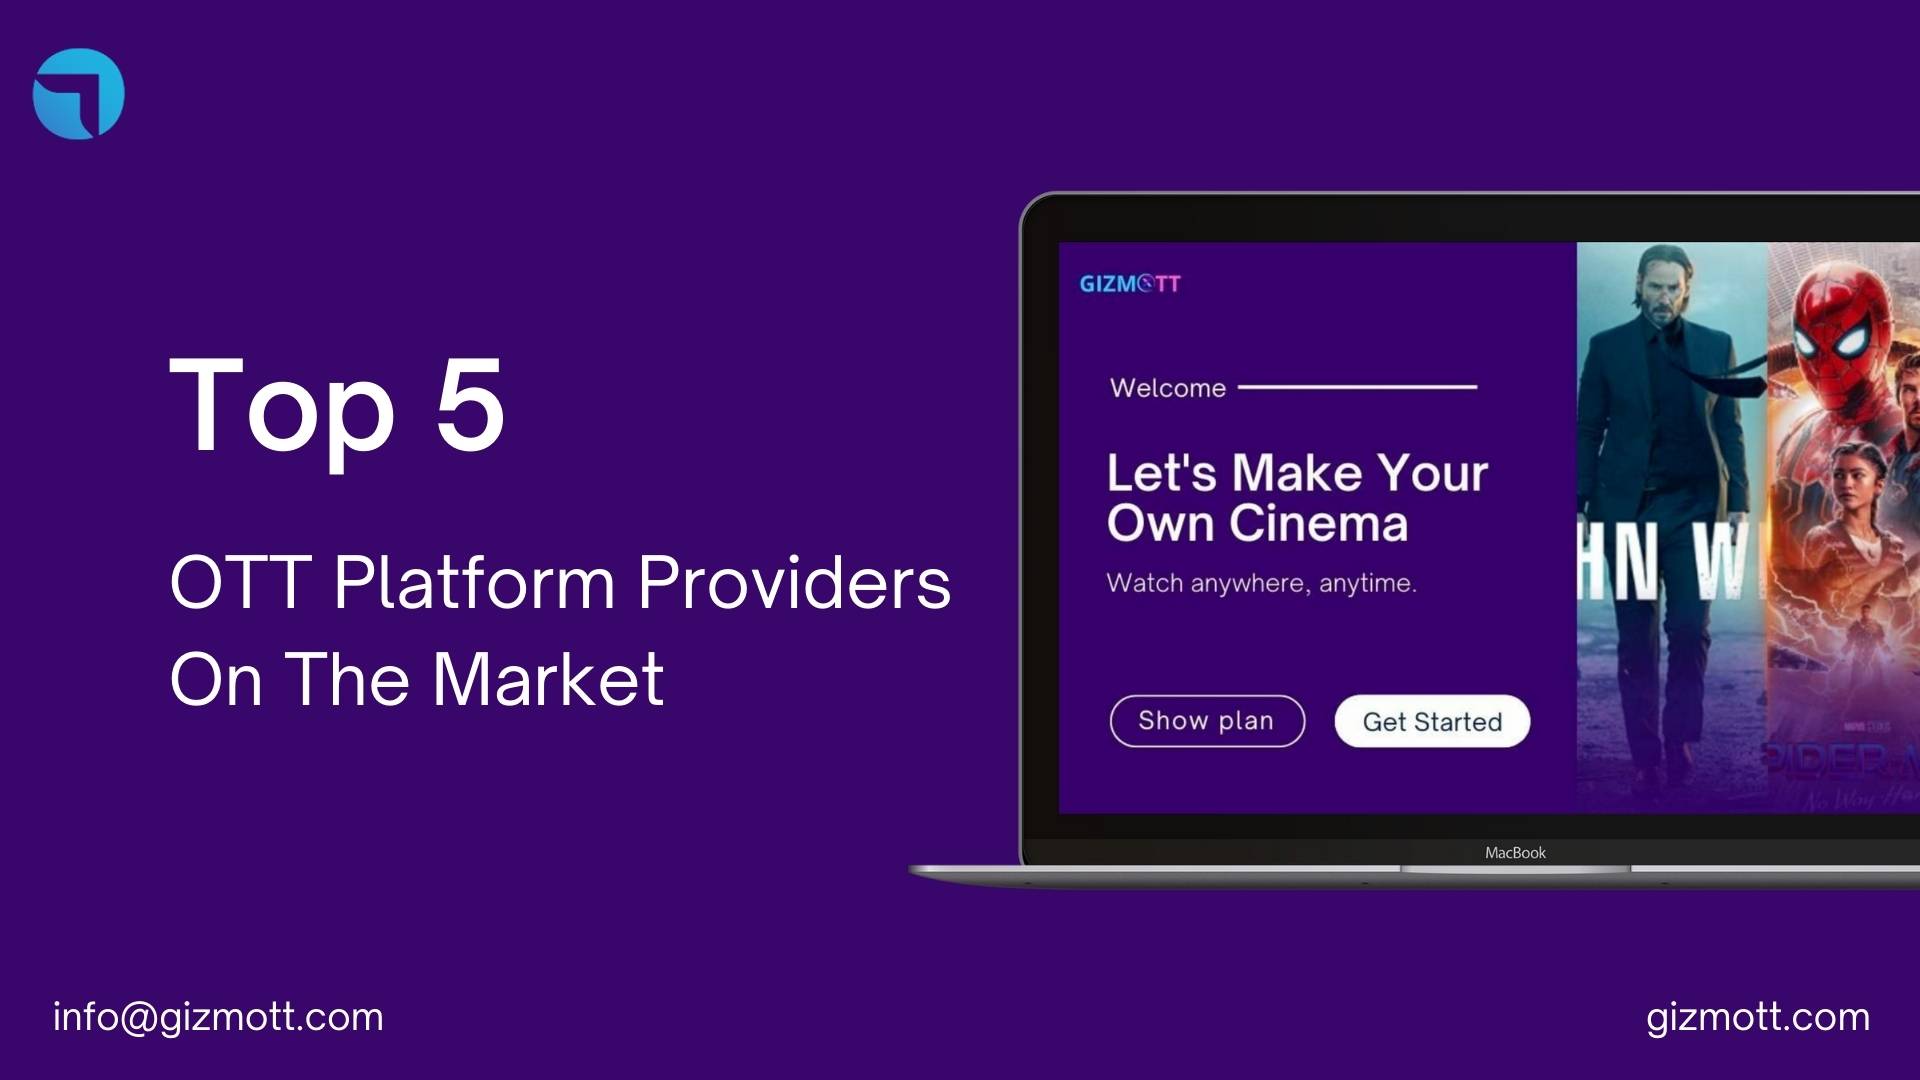 Top 5 OTT Platform Providers